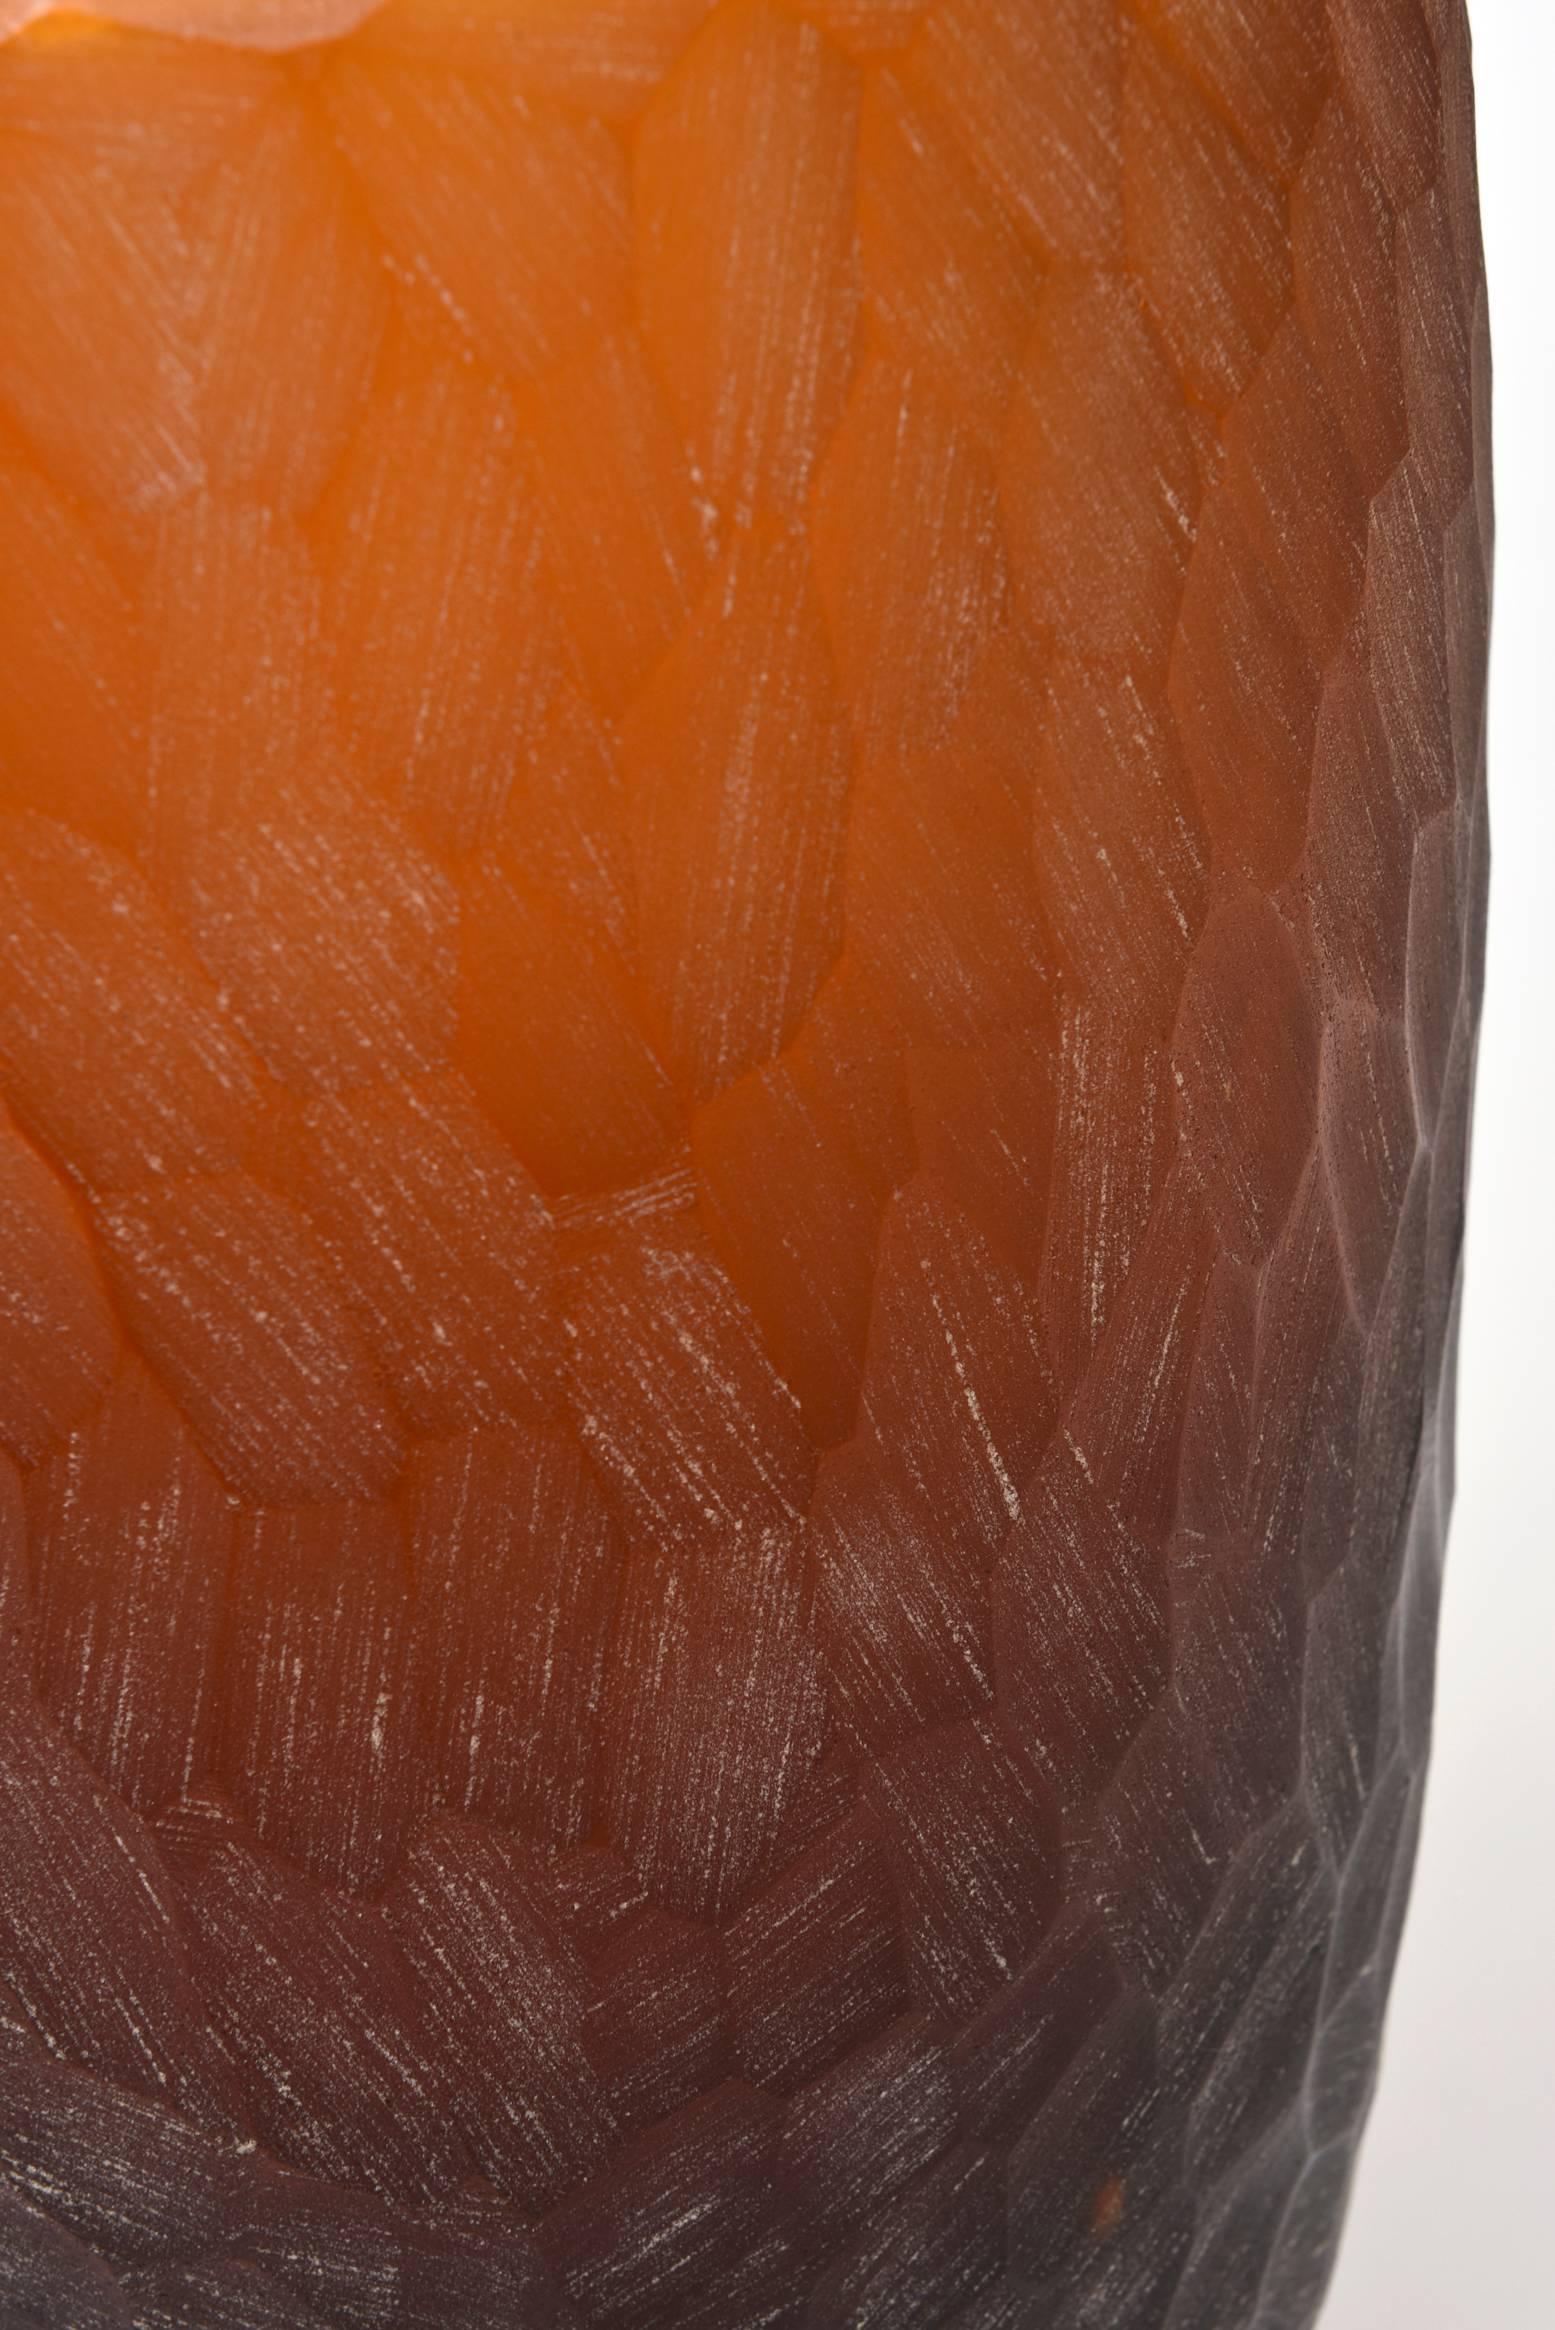 Rare Italian Modern Dark Amber and Gilt Decorated Vase, Seguso For Sale 2